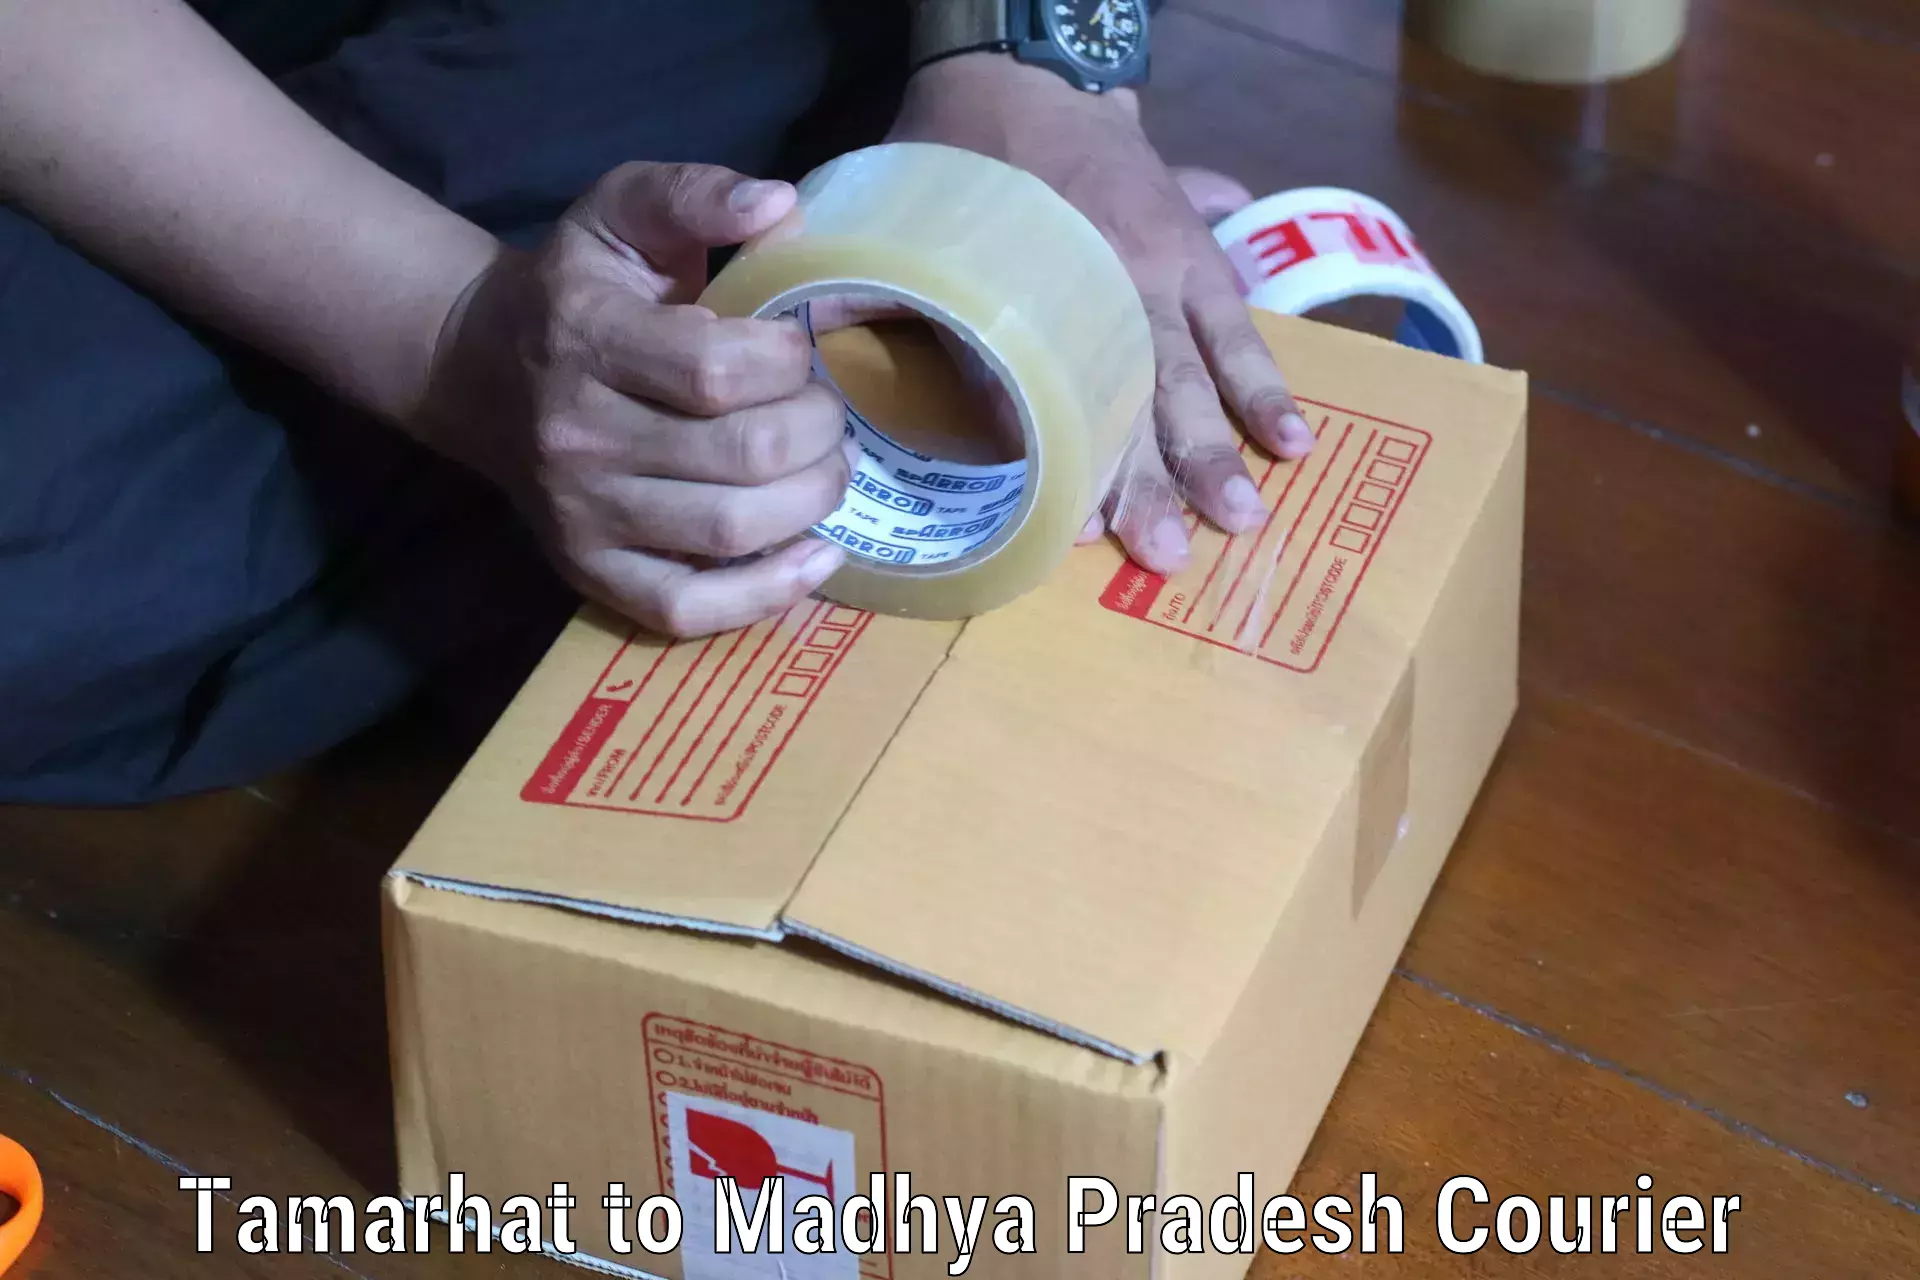 Lightweight parcel options Tamarhat to Betul